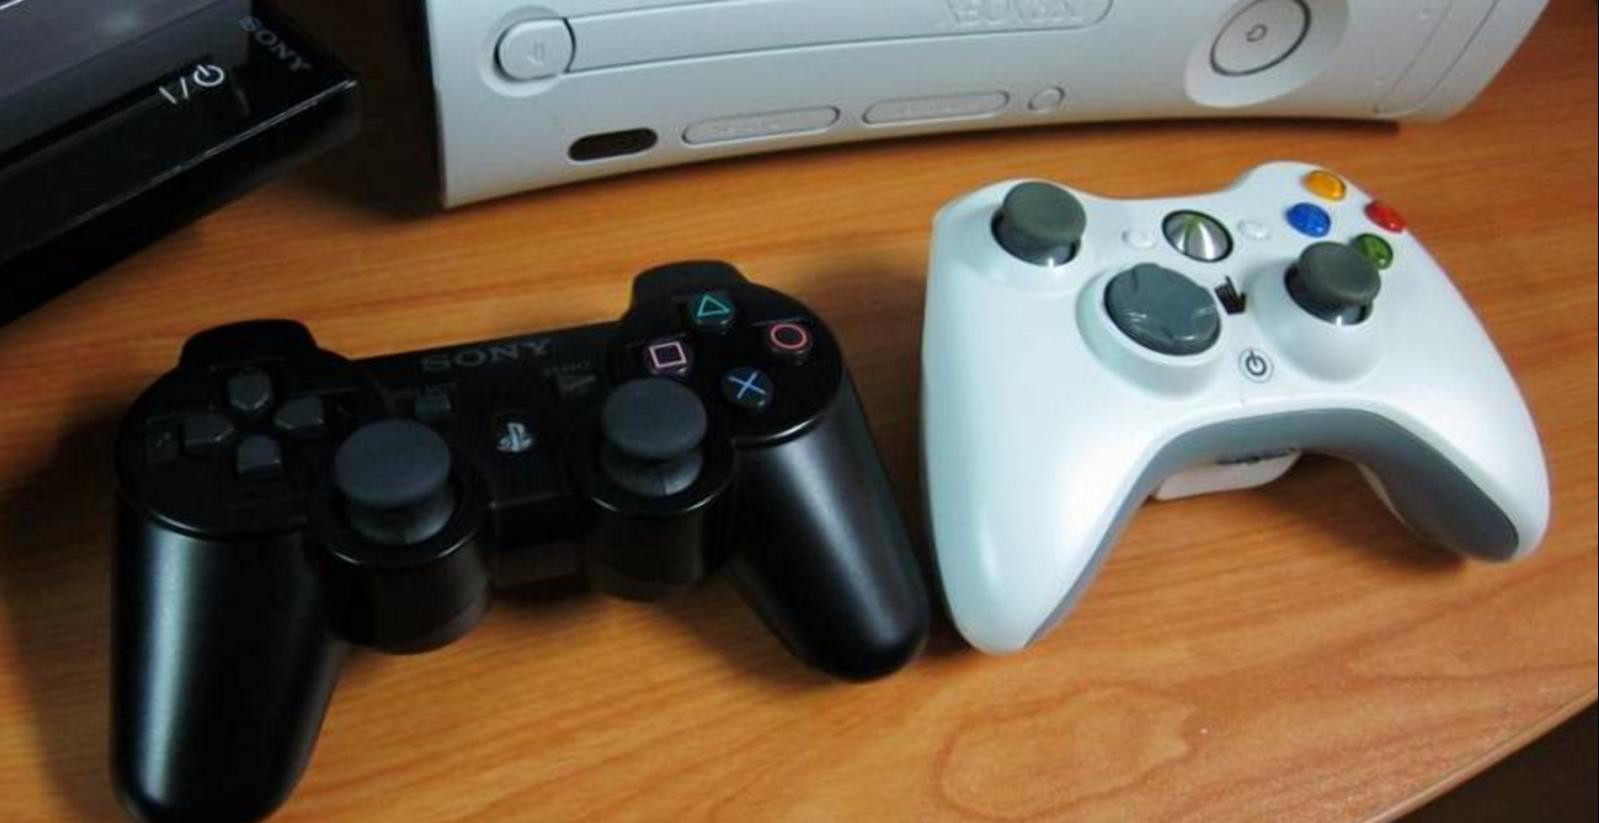 Ps3 boxing. Плейстейшен Xbox 360. Геймпад Xbox 360 и ps3. ПС 3 вс иксбокс 360. Xbox 360 vs ps3 контроллер.